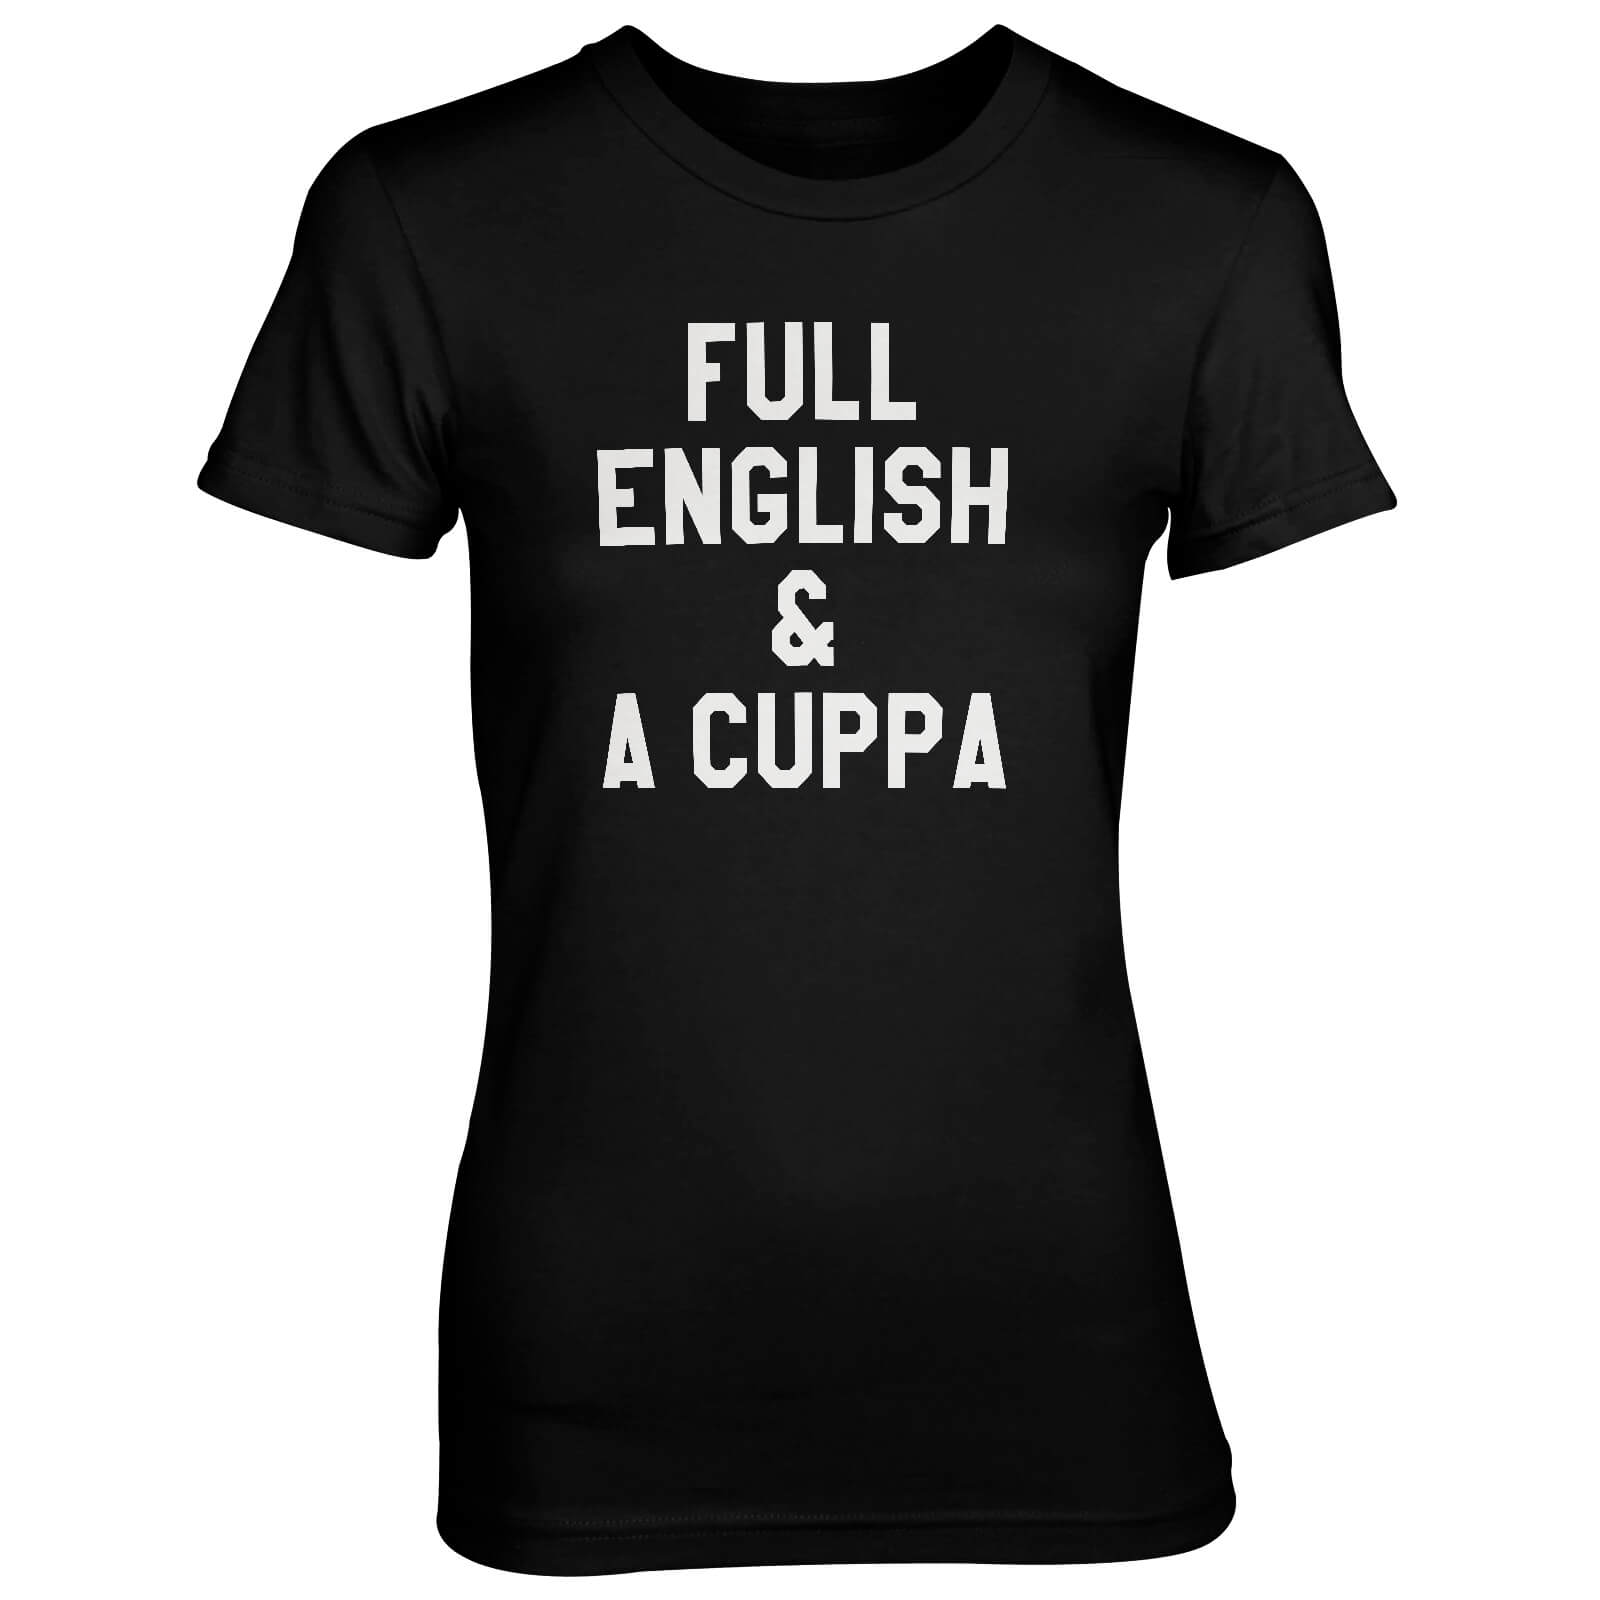 Full English And A Cuppa Women's Black T-Shirt - S - Black